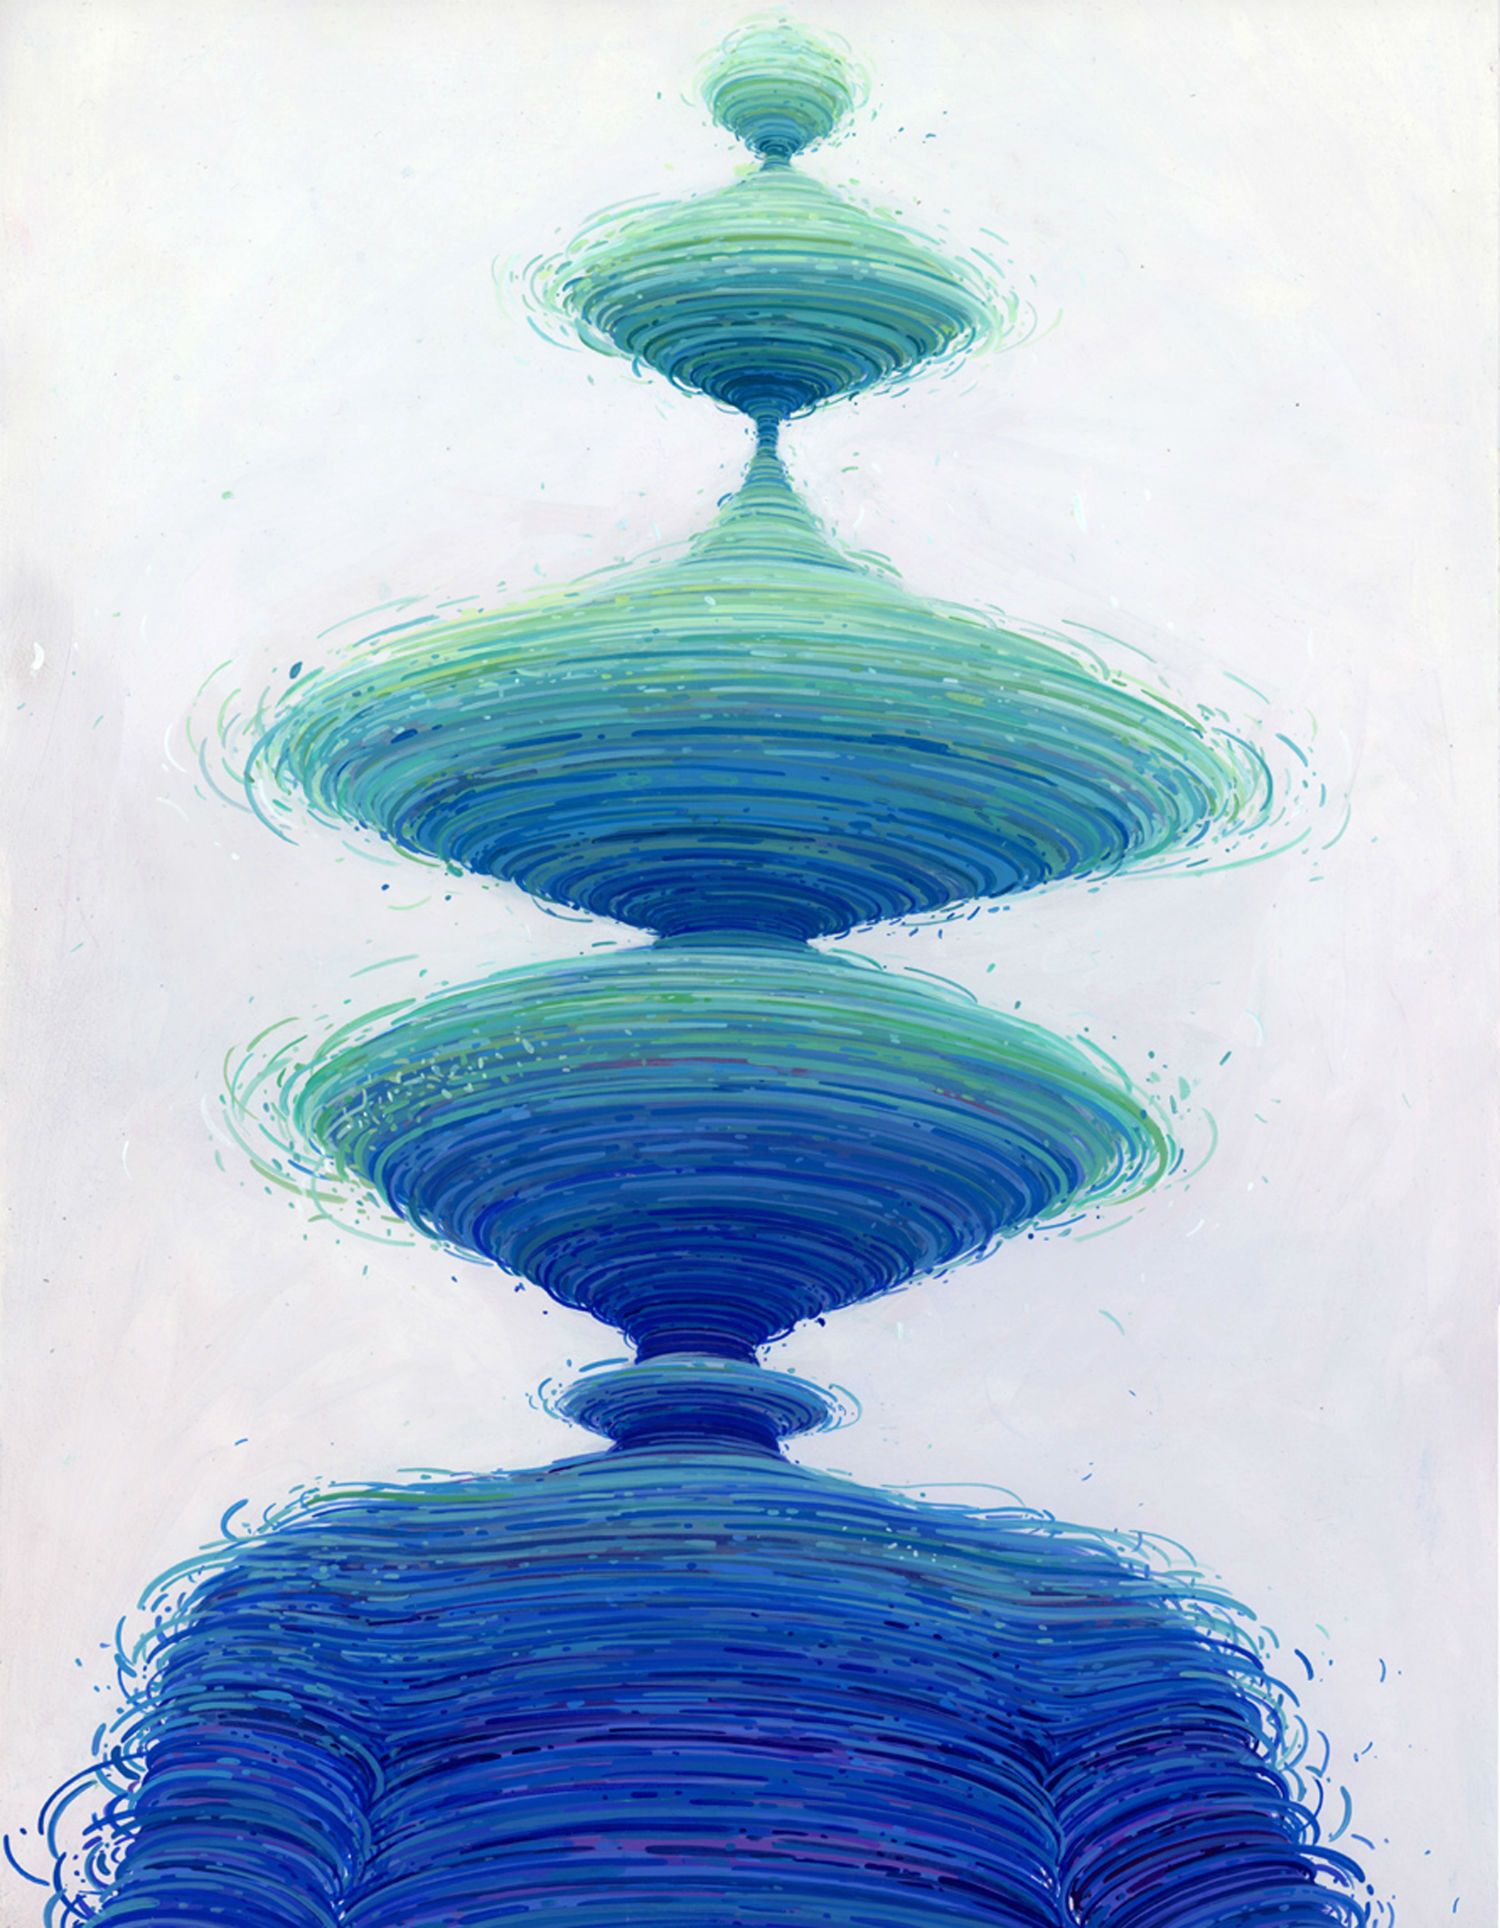 brendan monroe illustration blob colour surreal whirl blue fountain